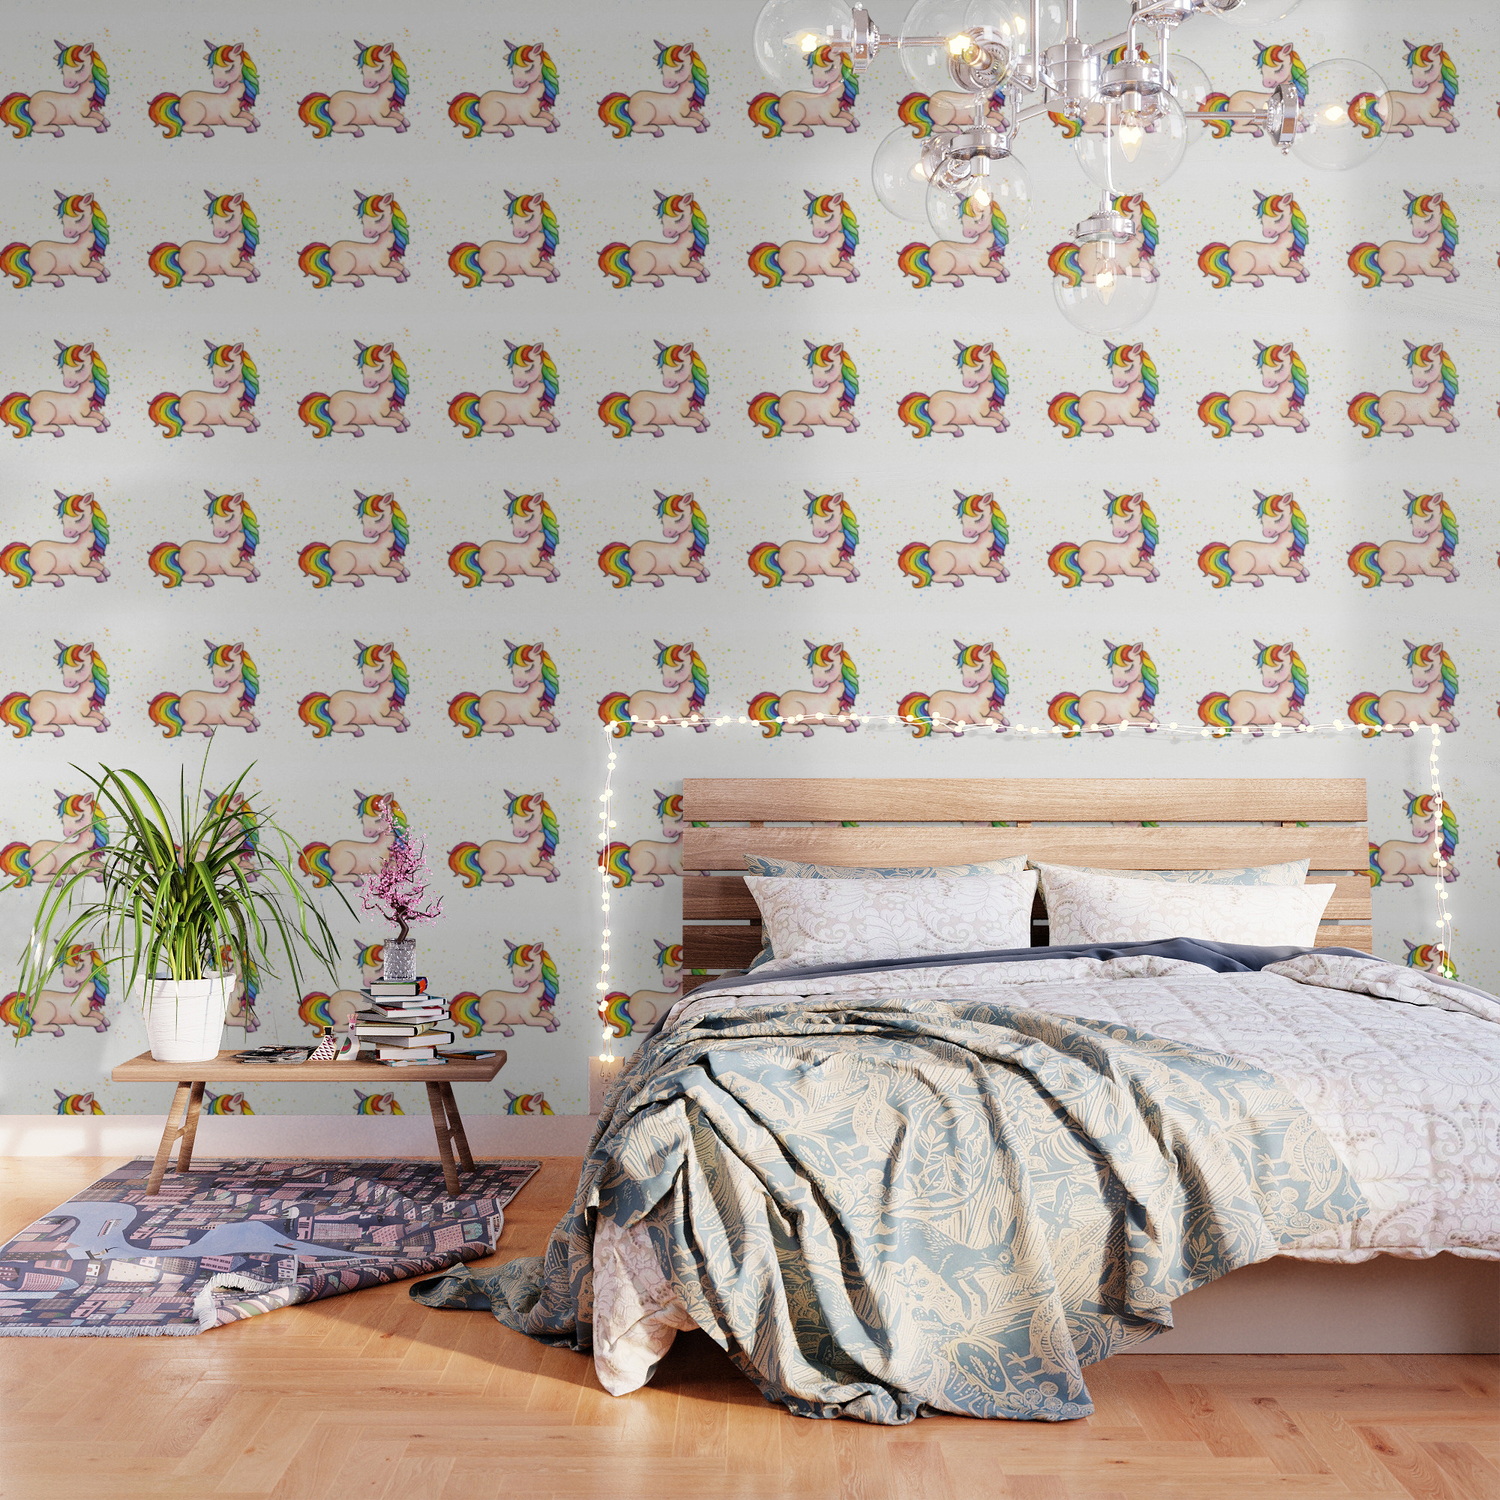 Sleeping Rainbow Unicorn Wallpaper By Olechka Society6